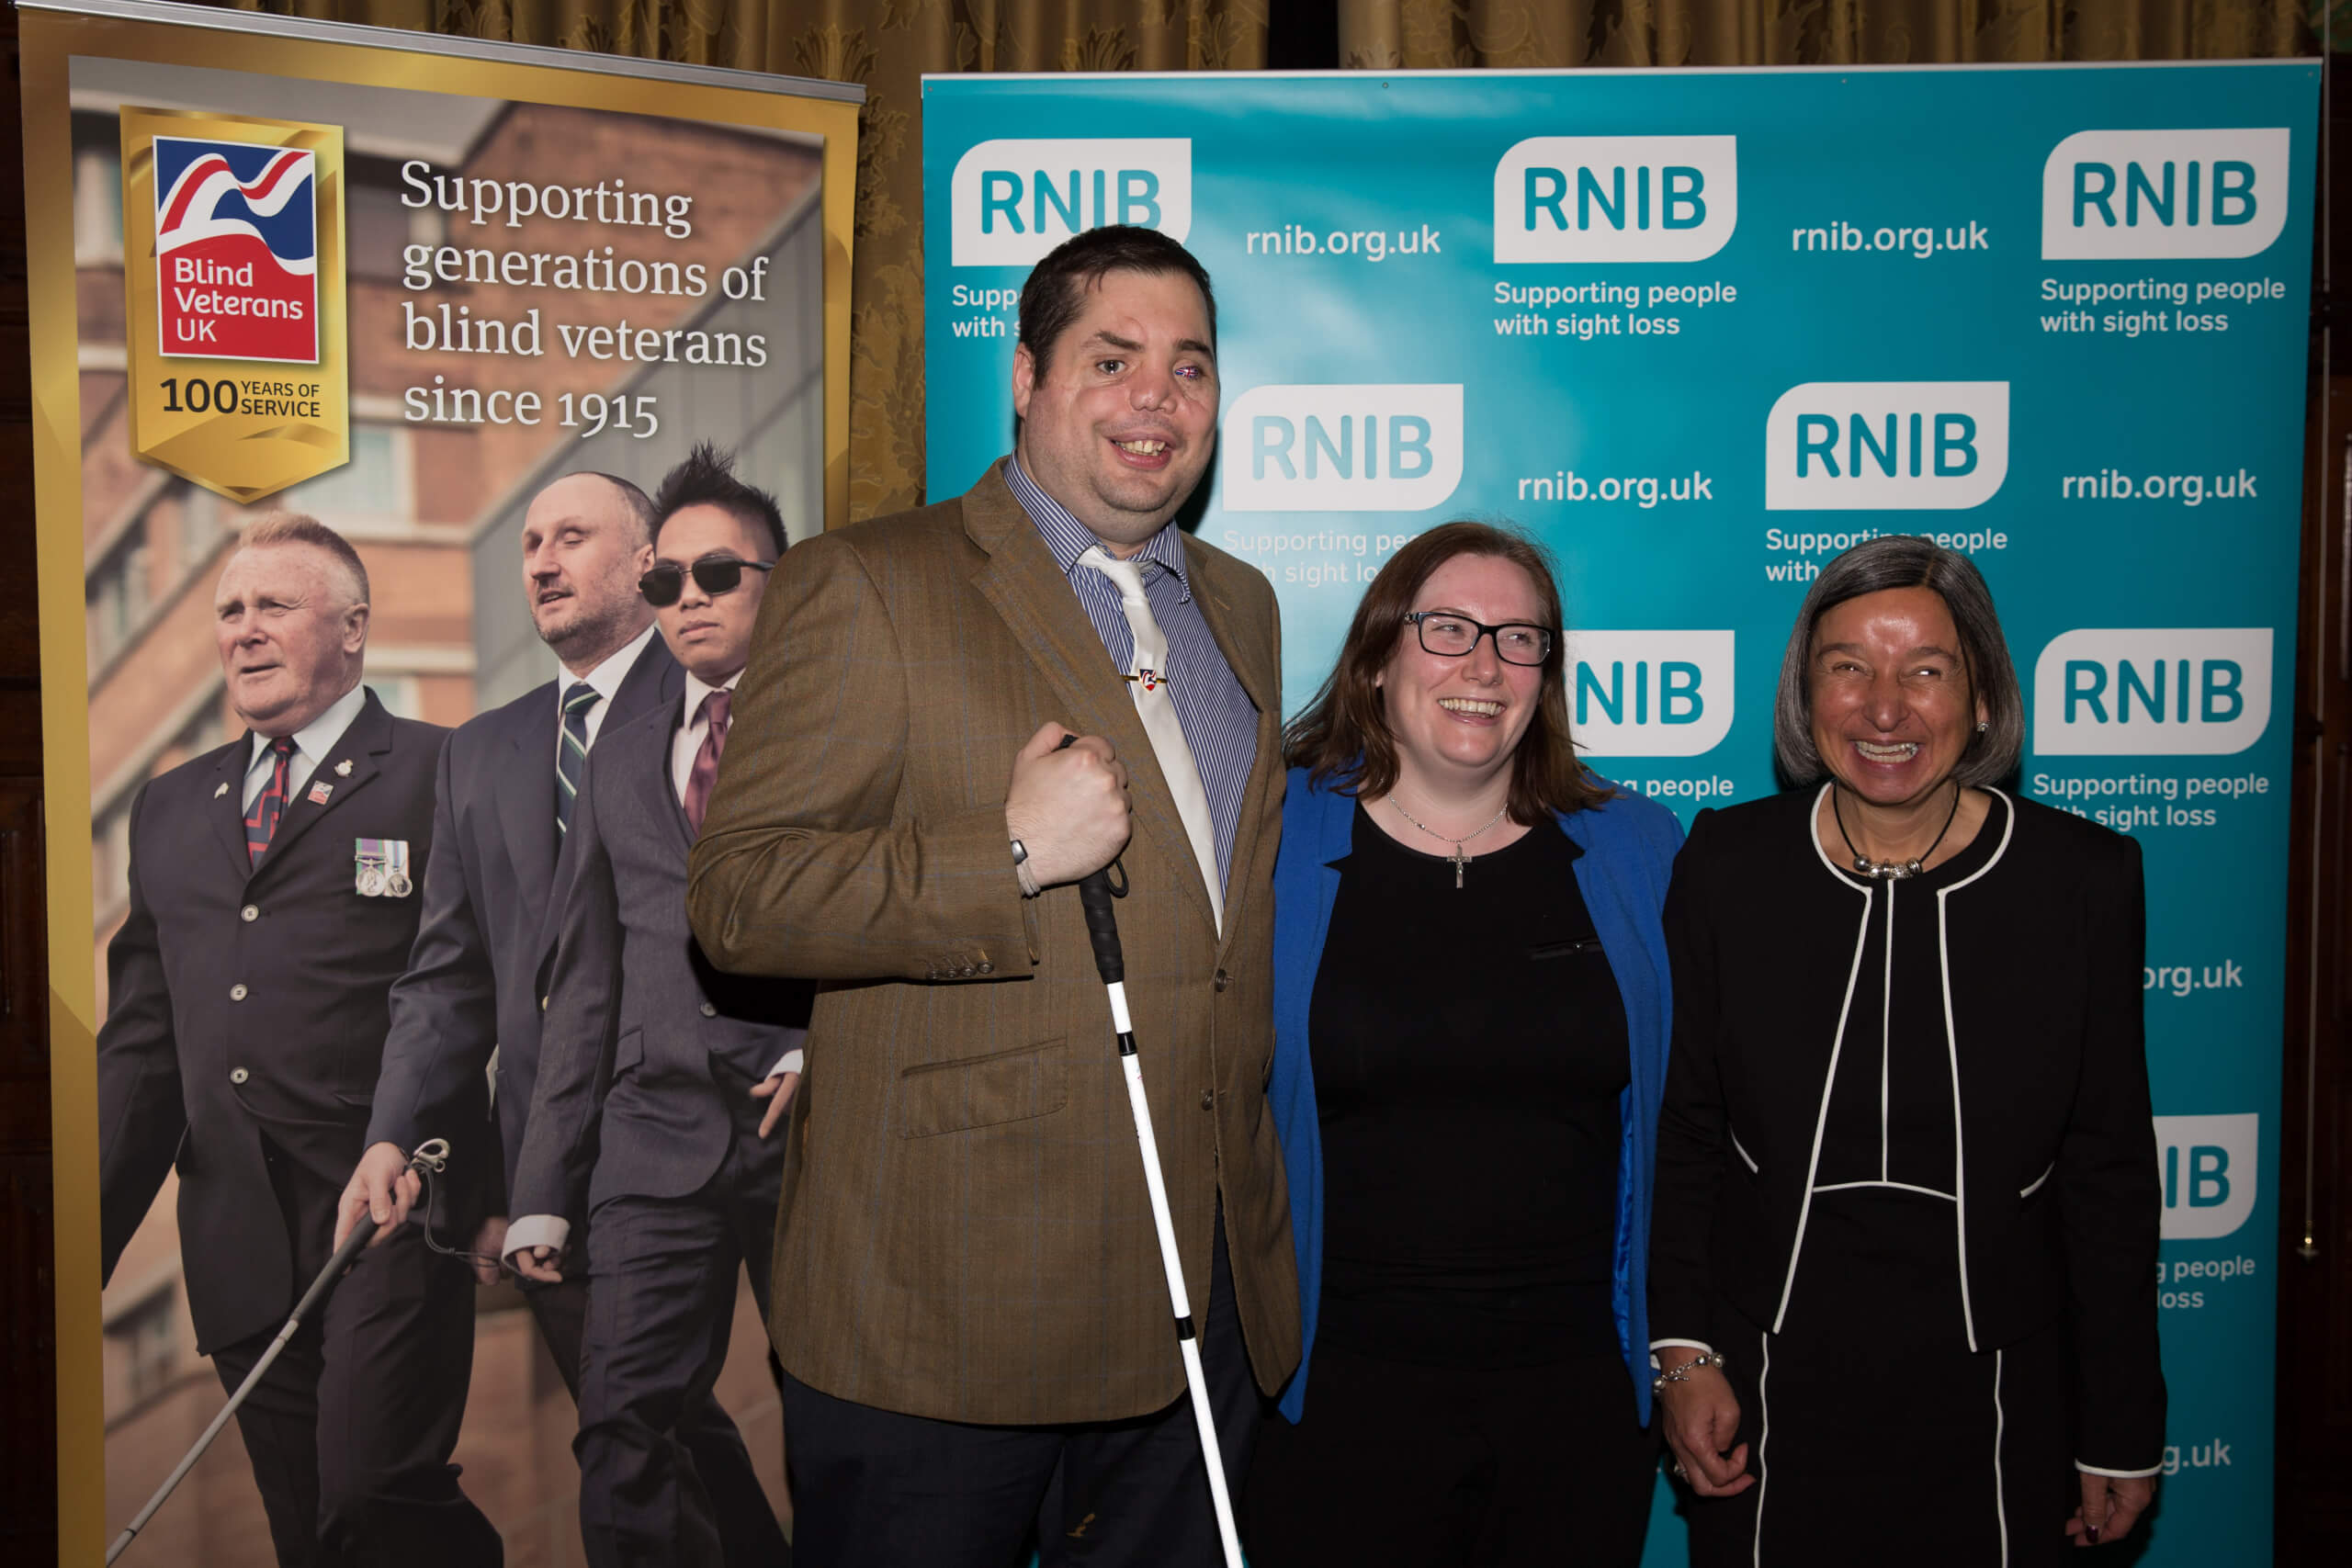 Emma backs RNIB campaign for sight loss support